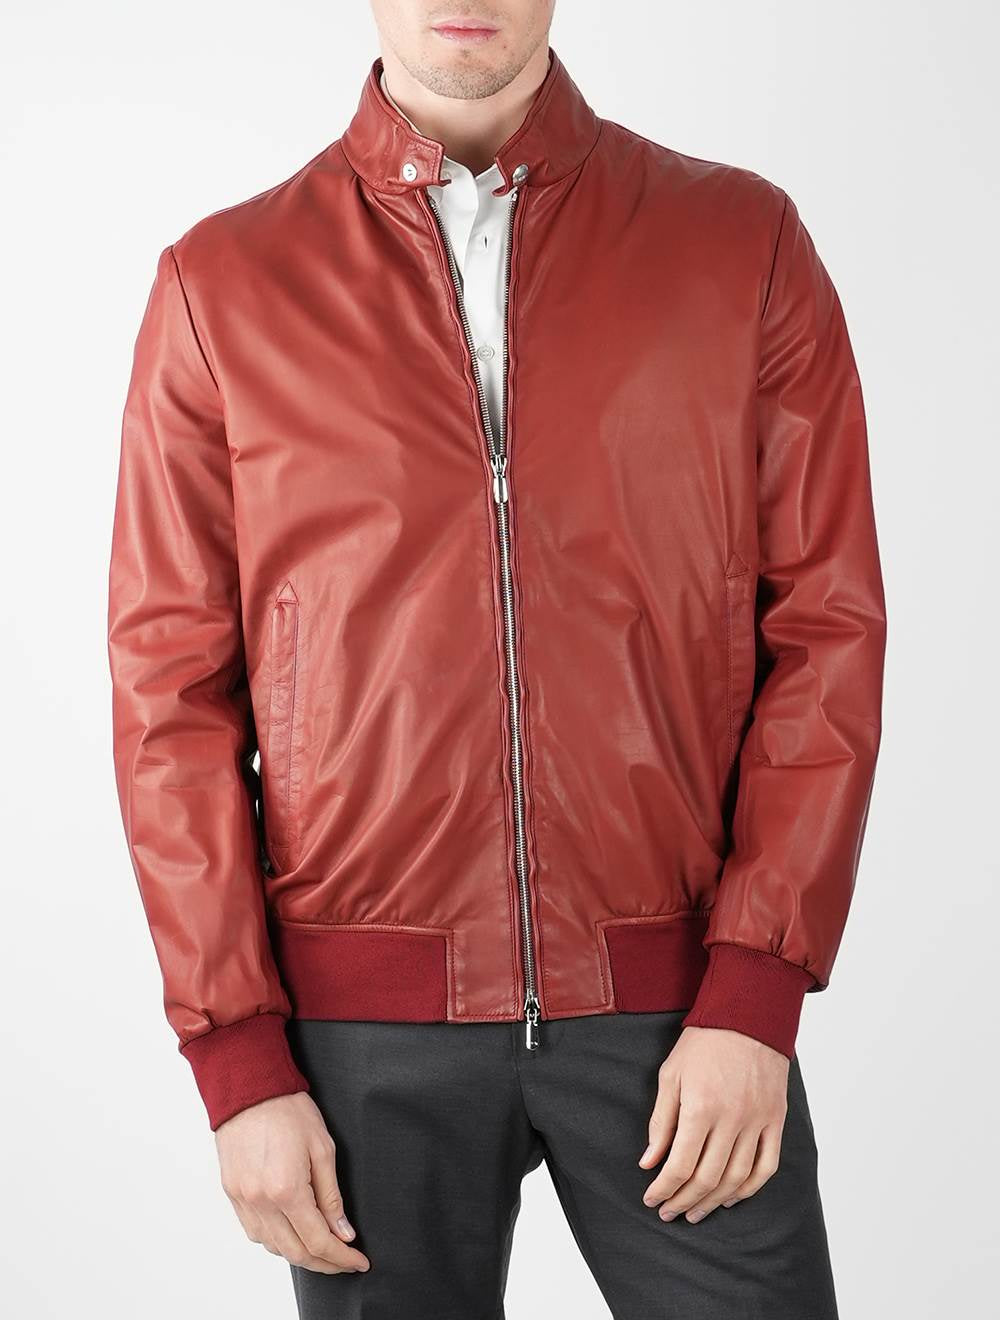 Cesare Attolini Red Leather Coat